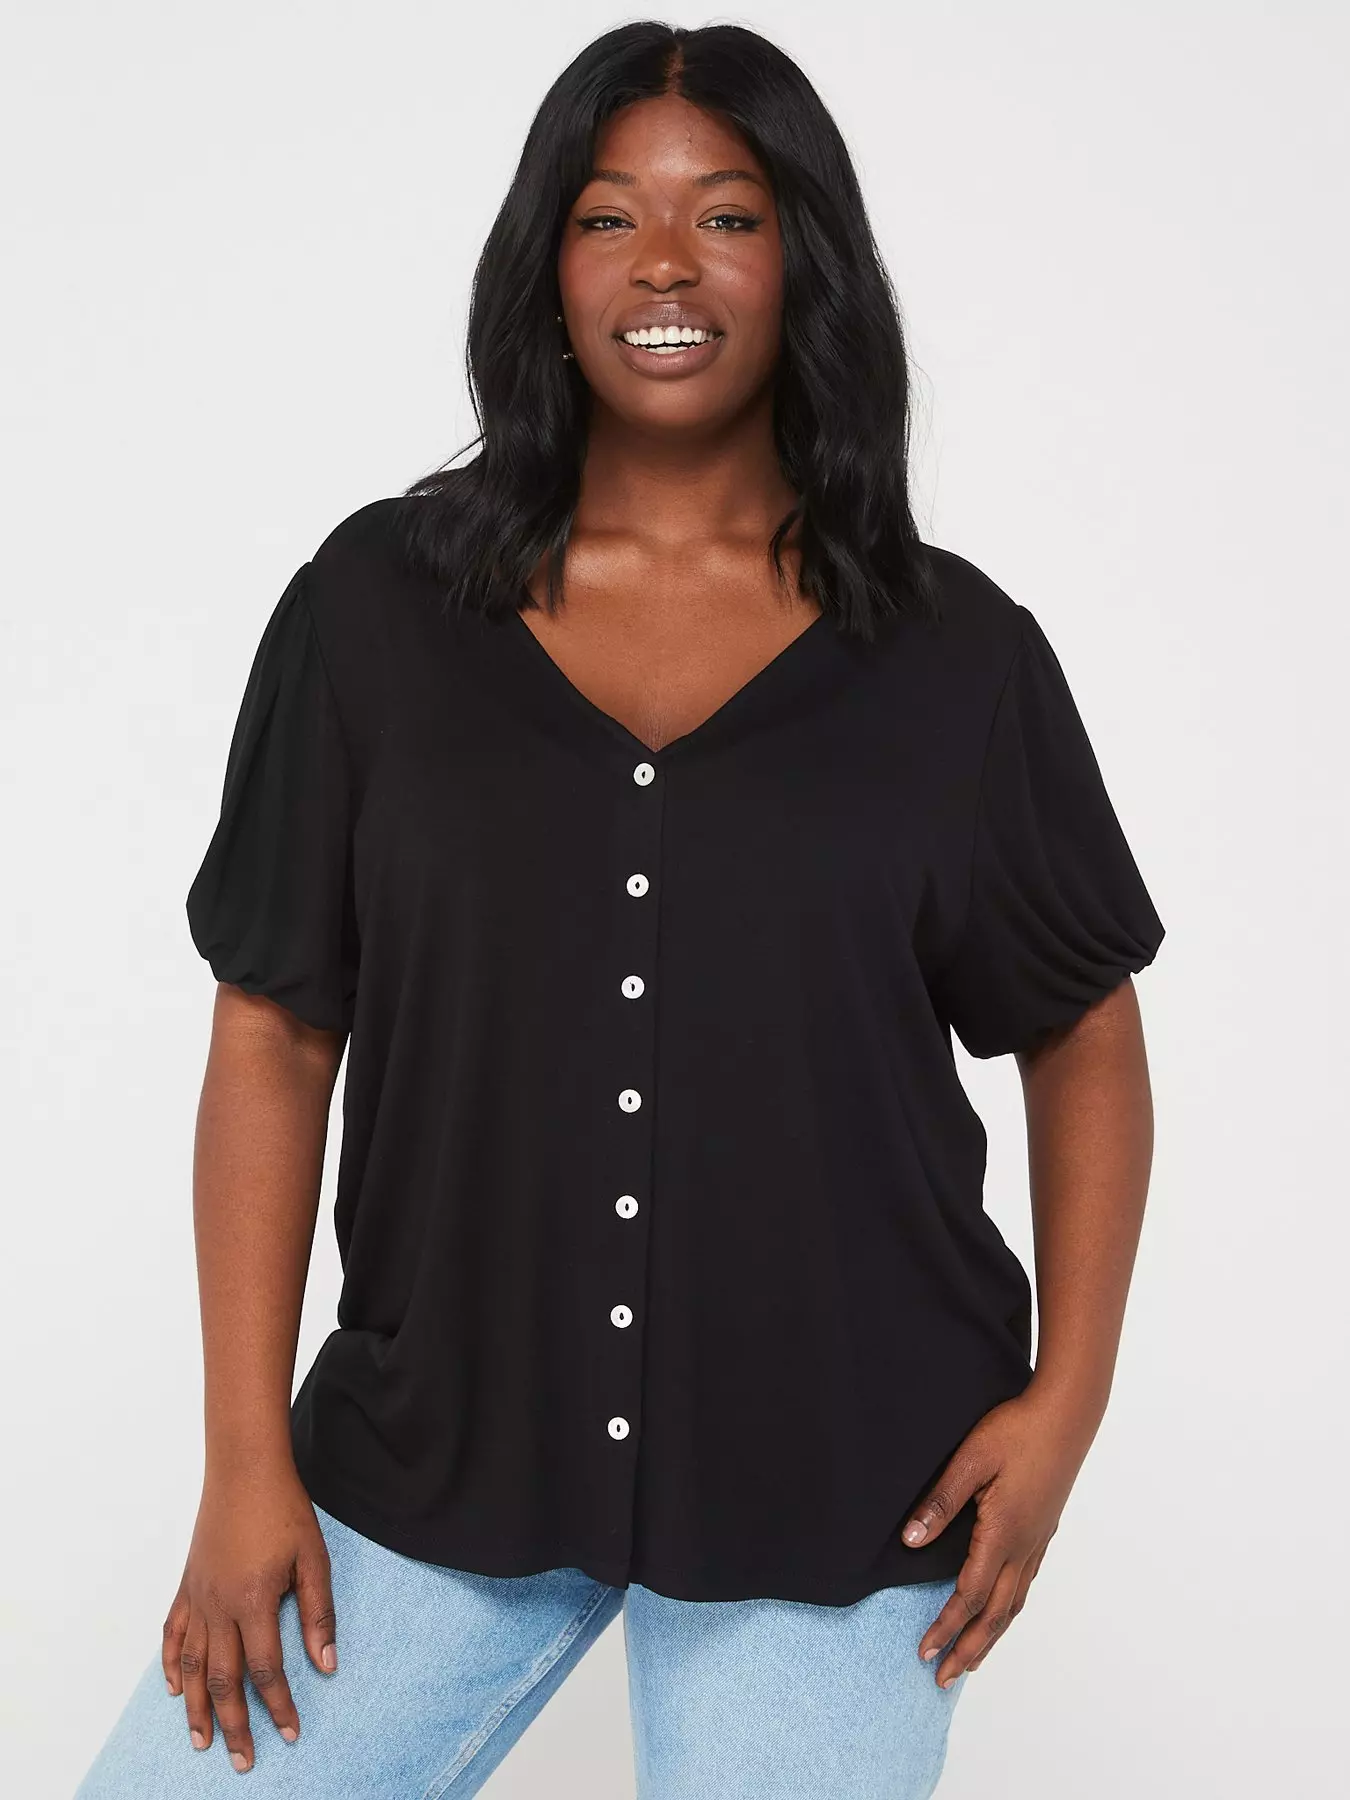 www. - Plus Size - 16 Color Plus size Ladies Chiffon Blouses  Batwing sleeve tops shirts